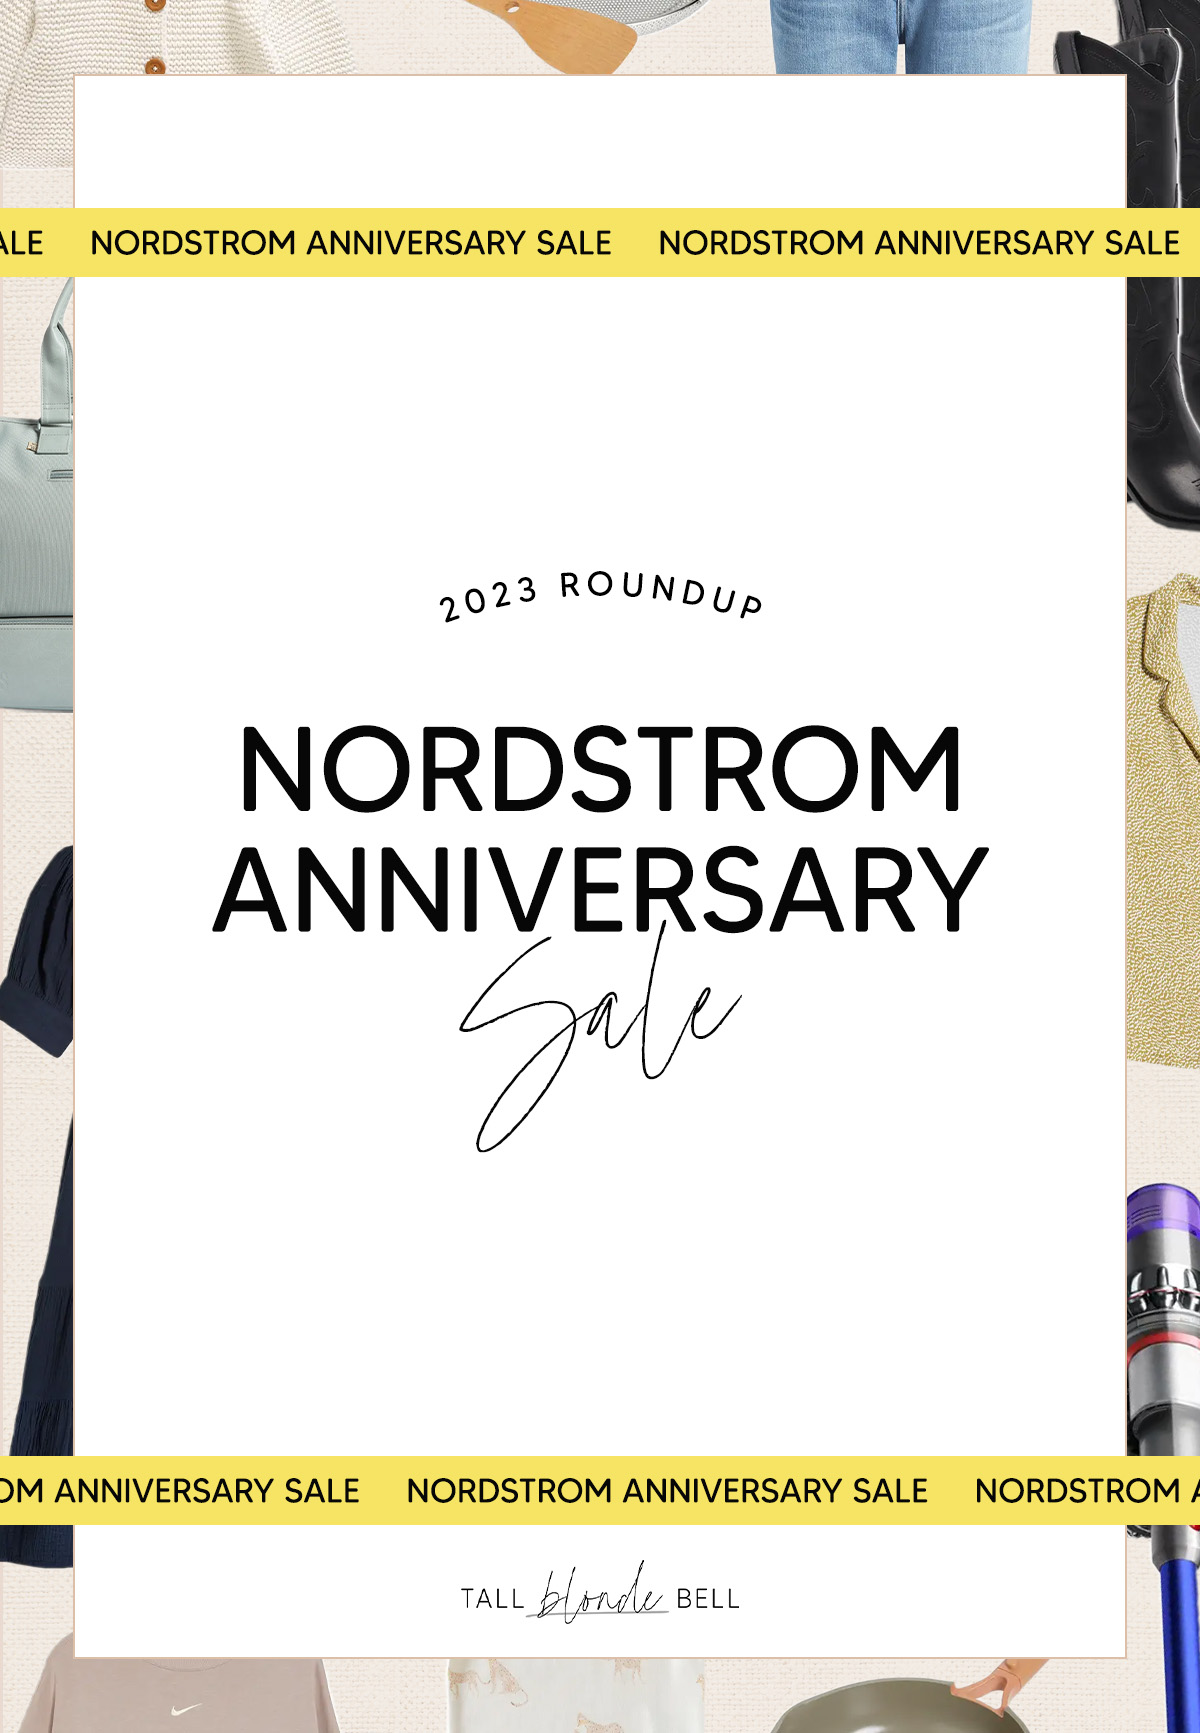 Nordstrom Anniversary Sale 2023 Roundup 